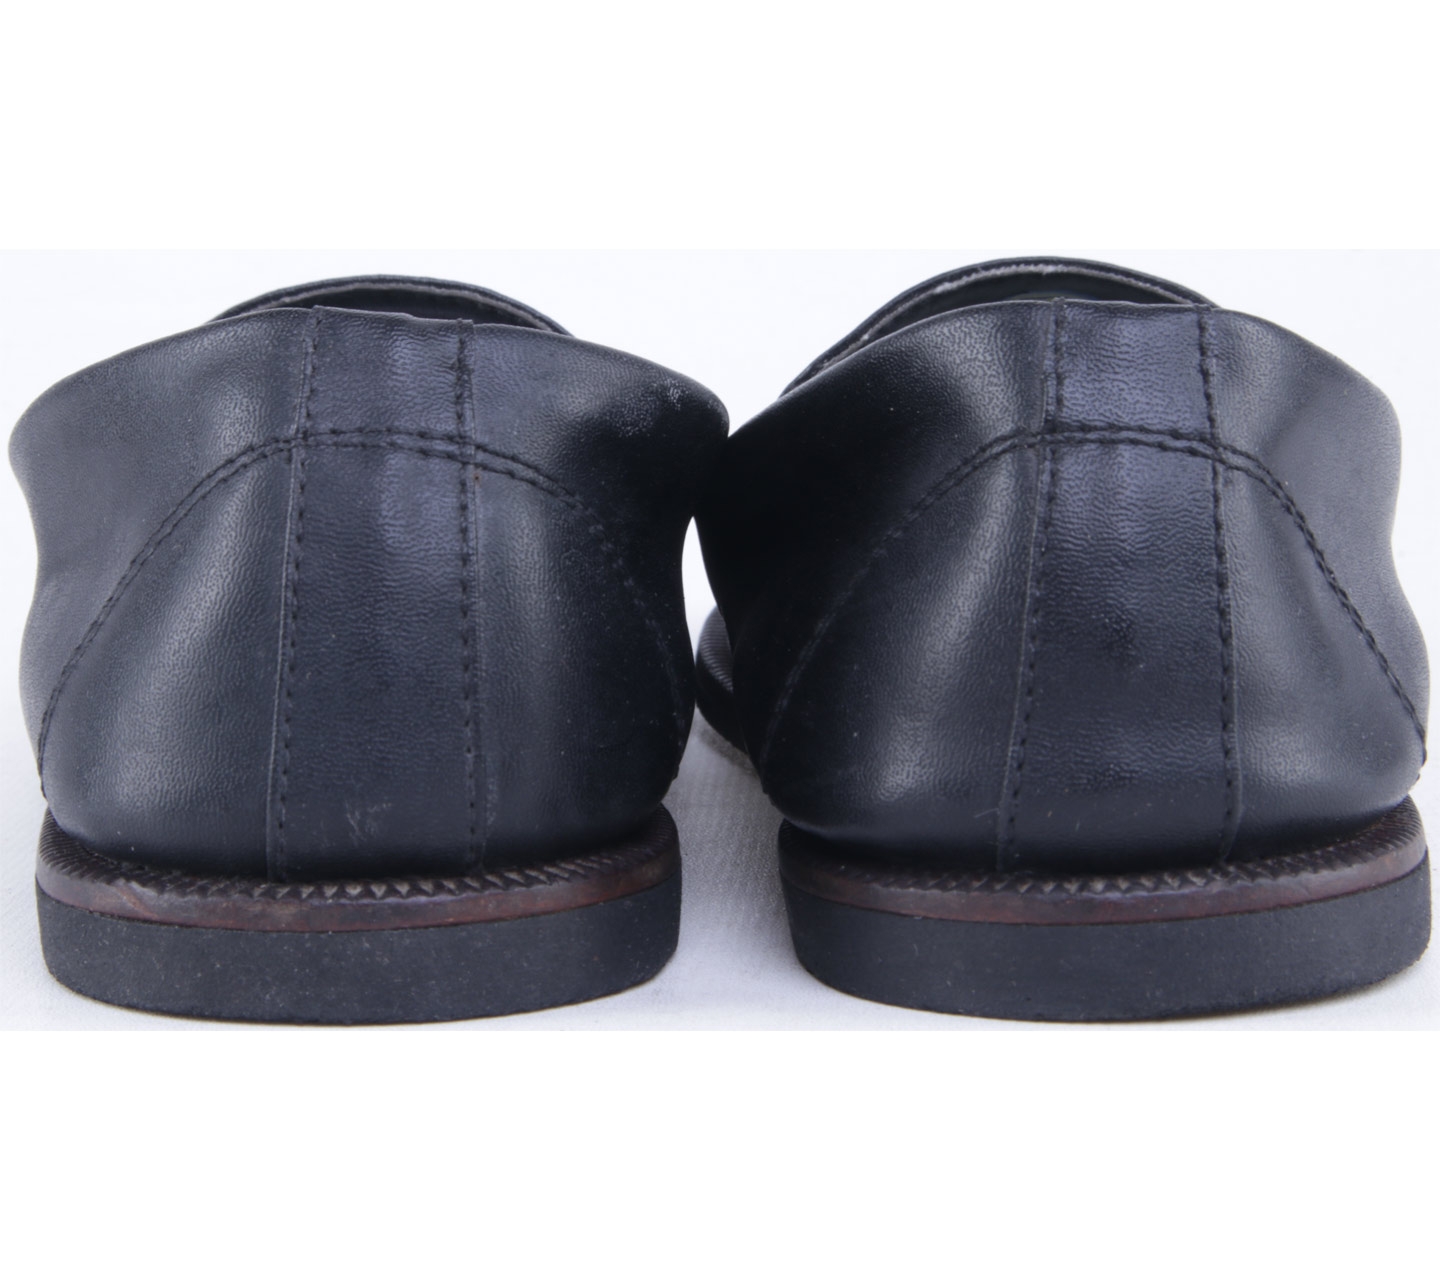 Amble Black Slip On Flat Shoes